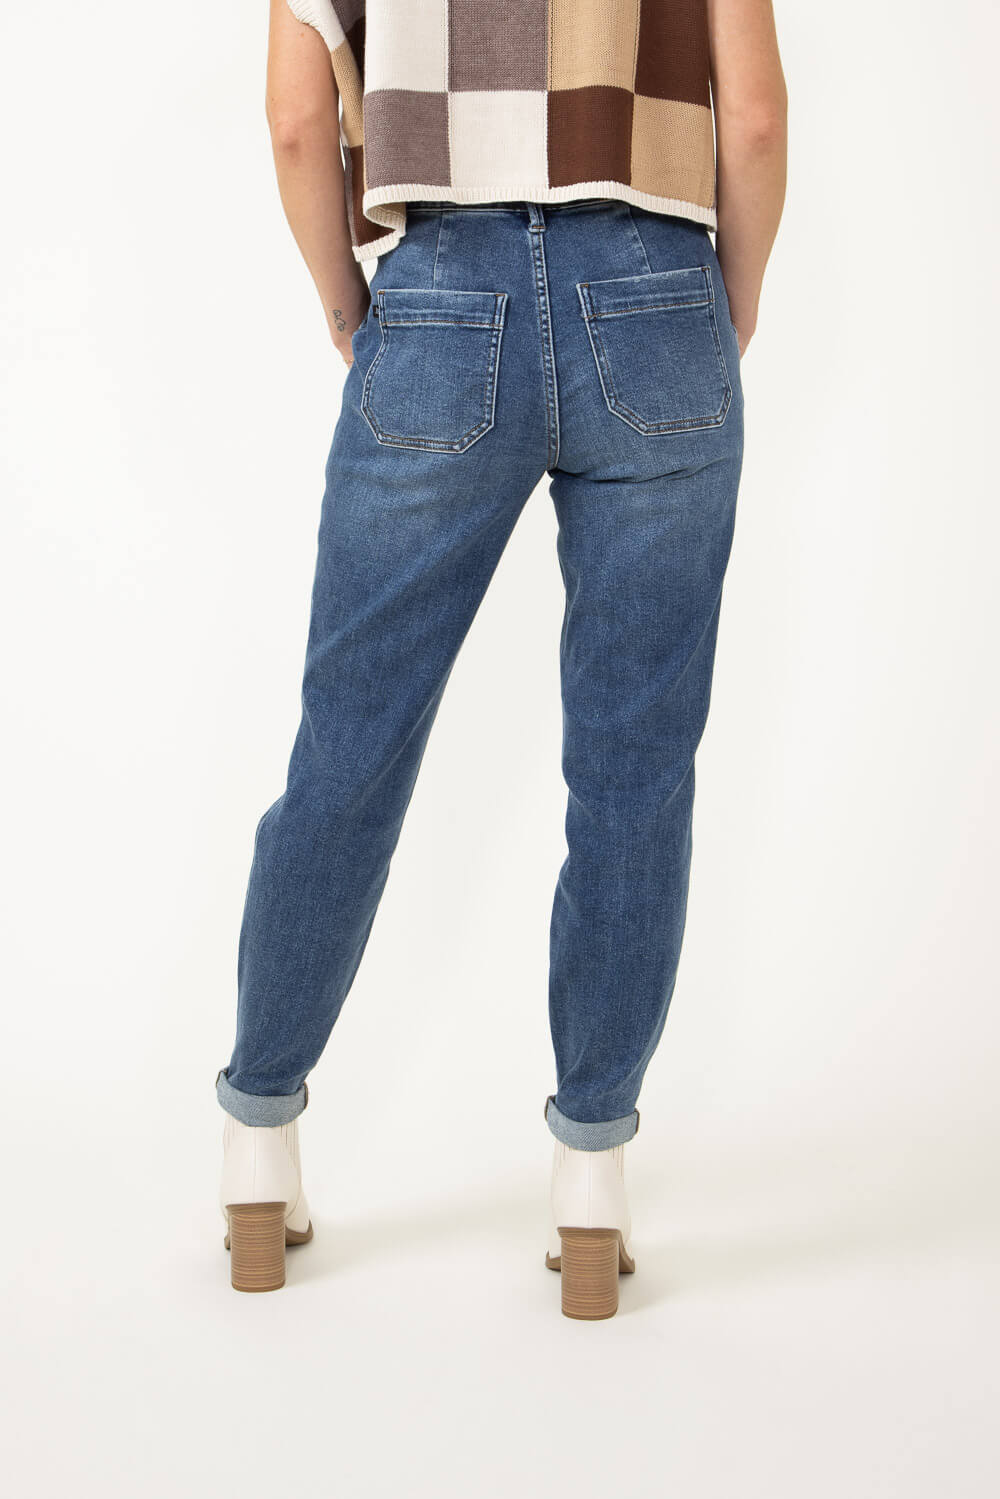 Levis Jeans Womens Small Jogger Blue Denim Pants Drawstring Medium Wash  Casual | eBay